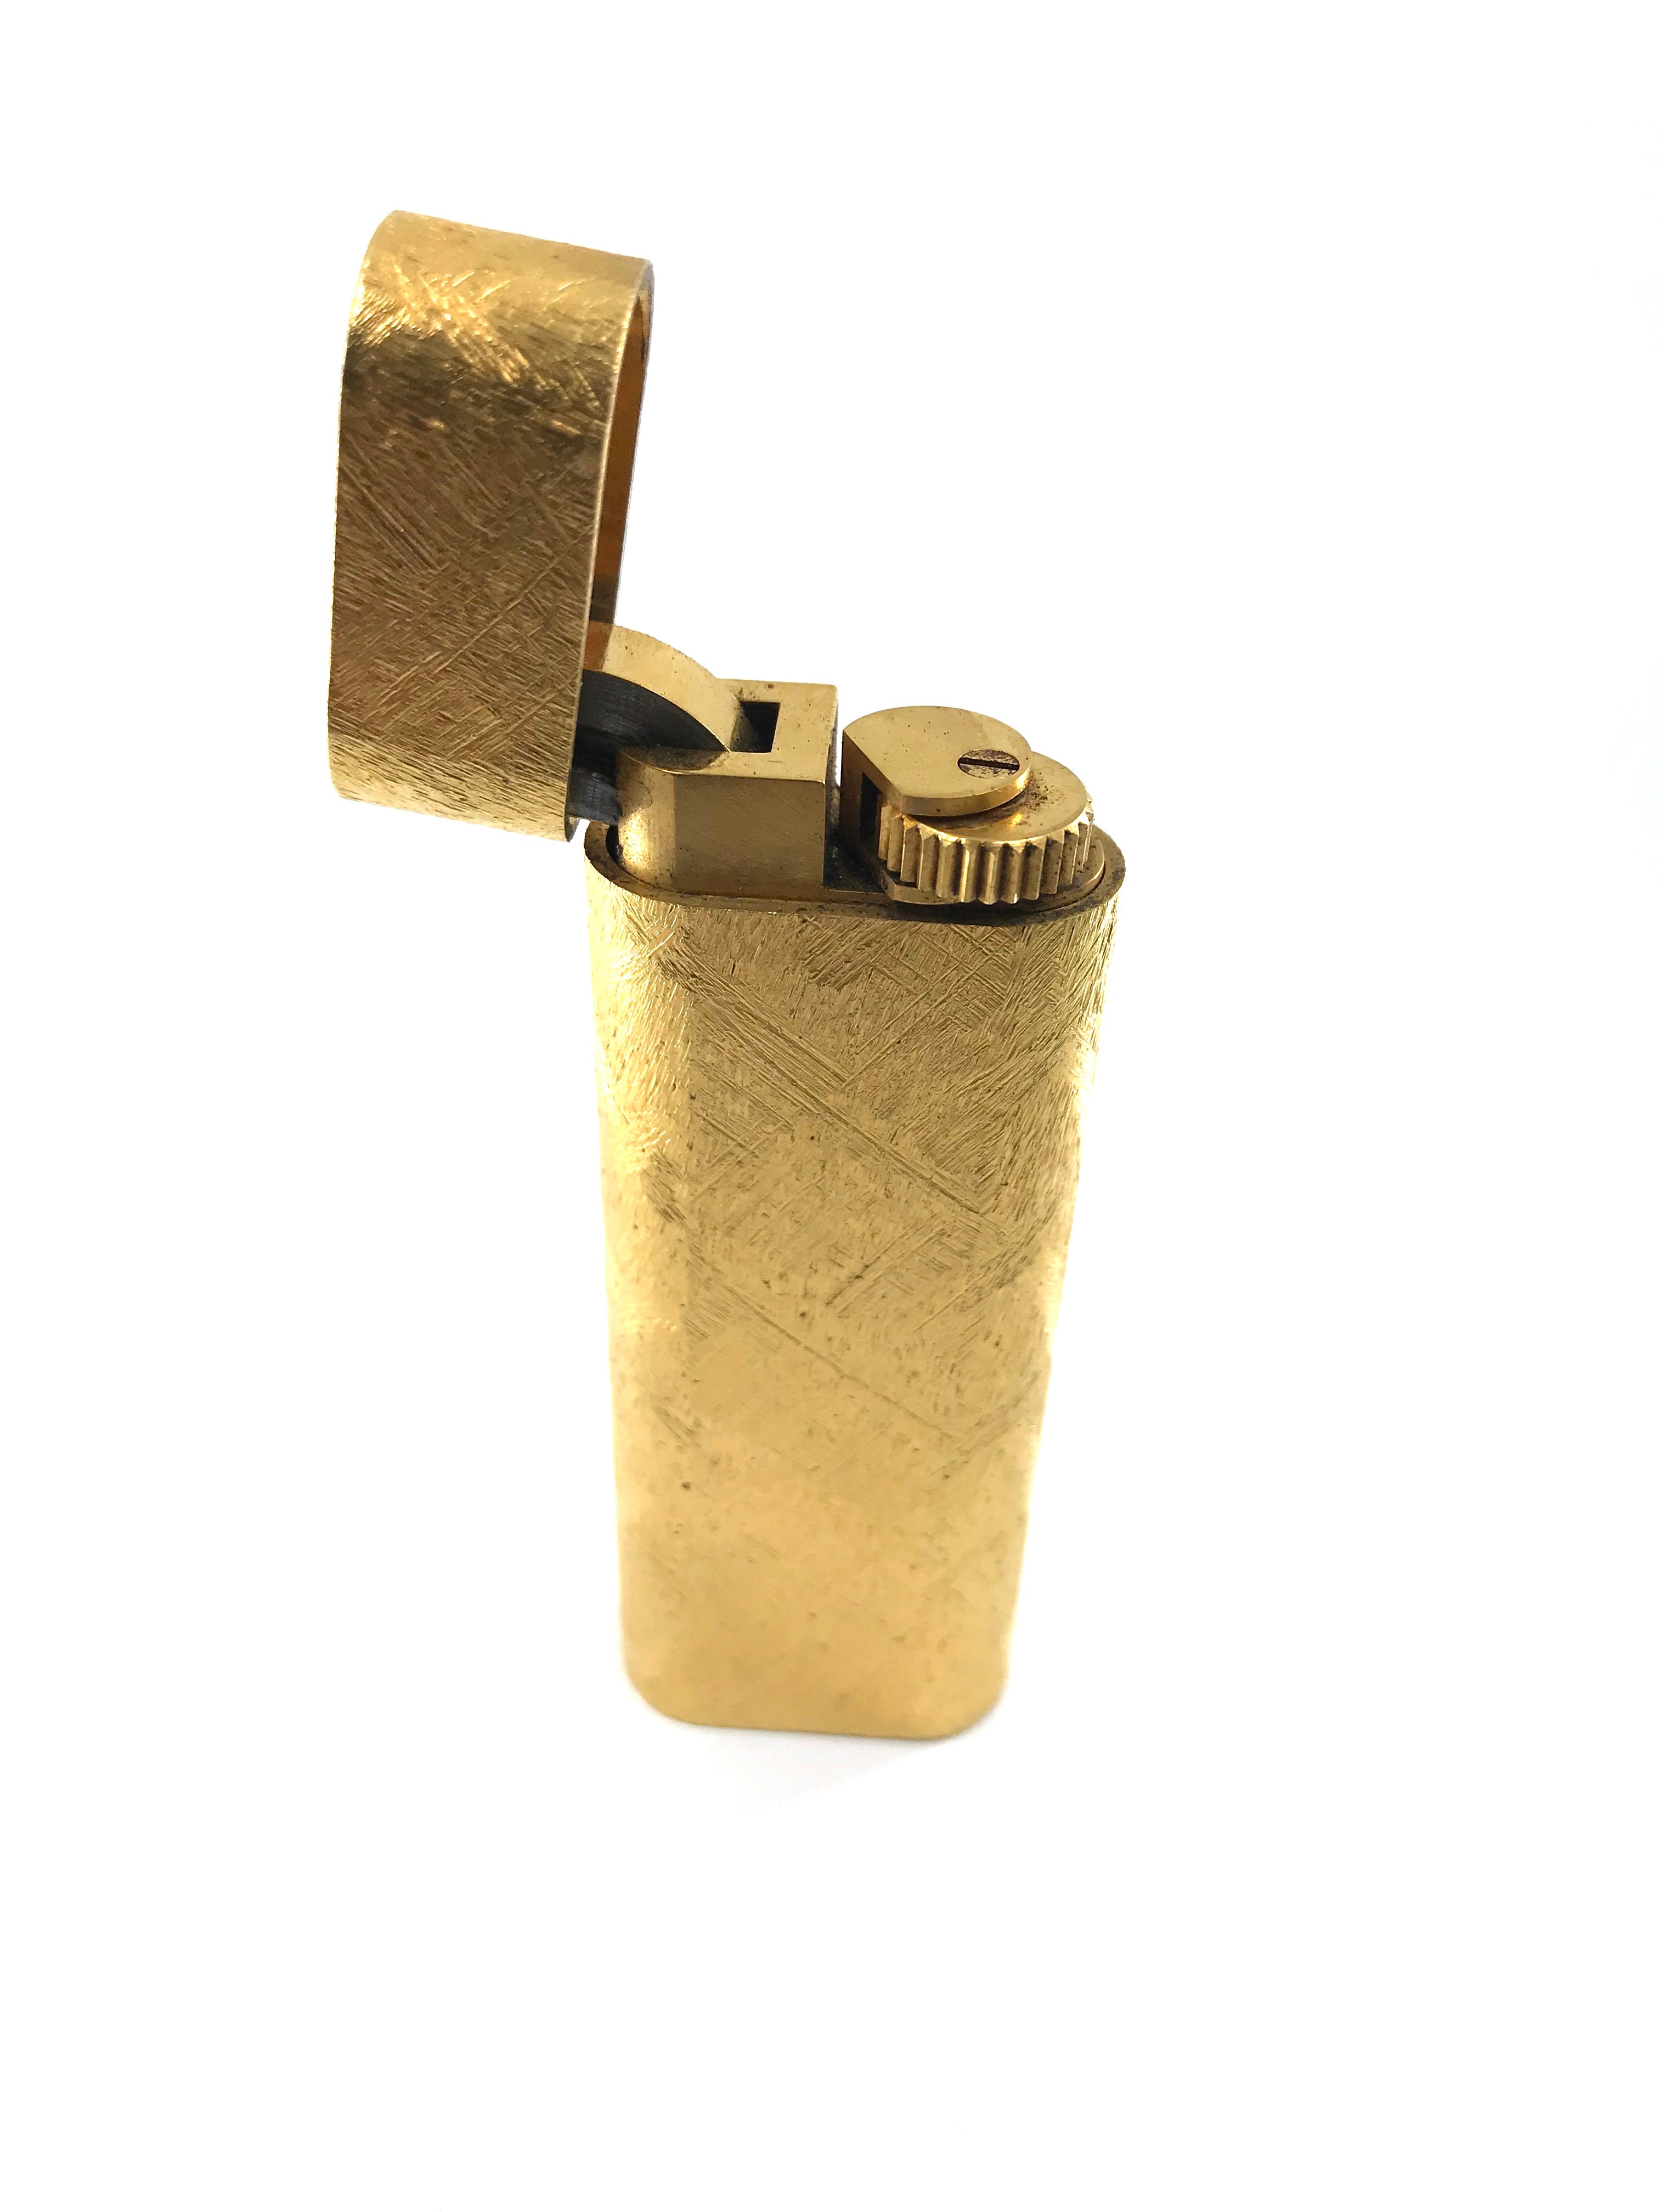 Cartier Paris gold plated pocket gas lighter oval shape working rare v ...